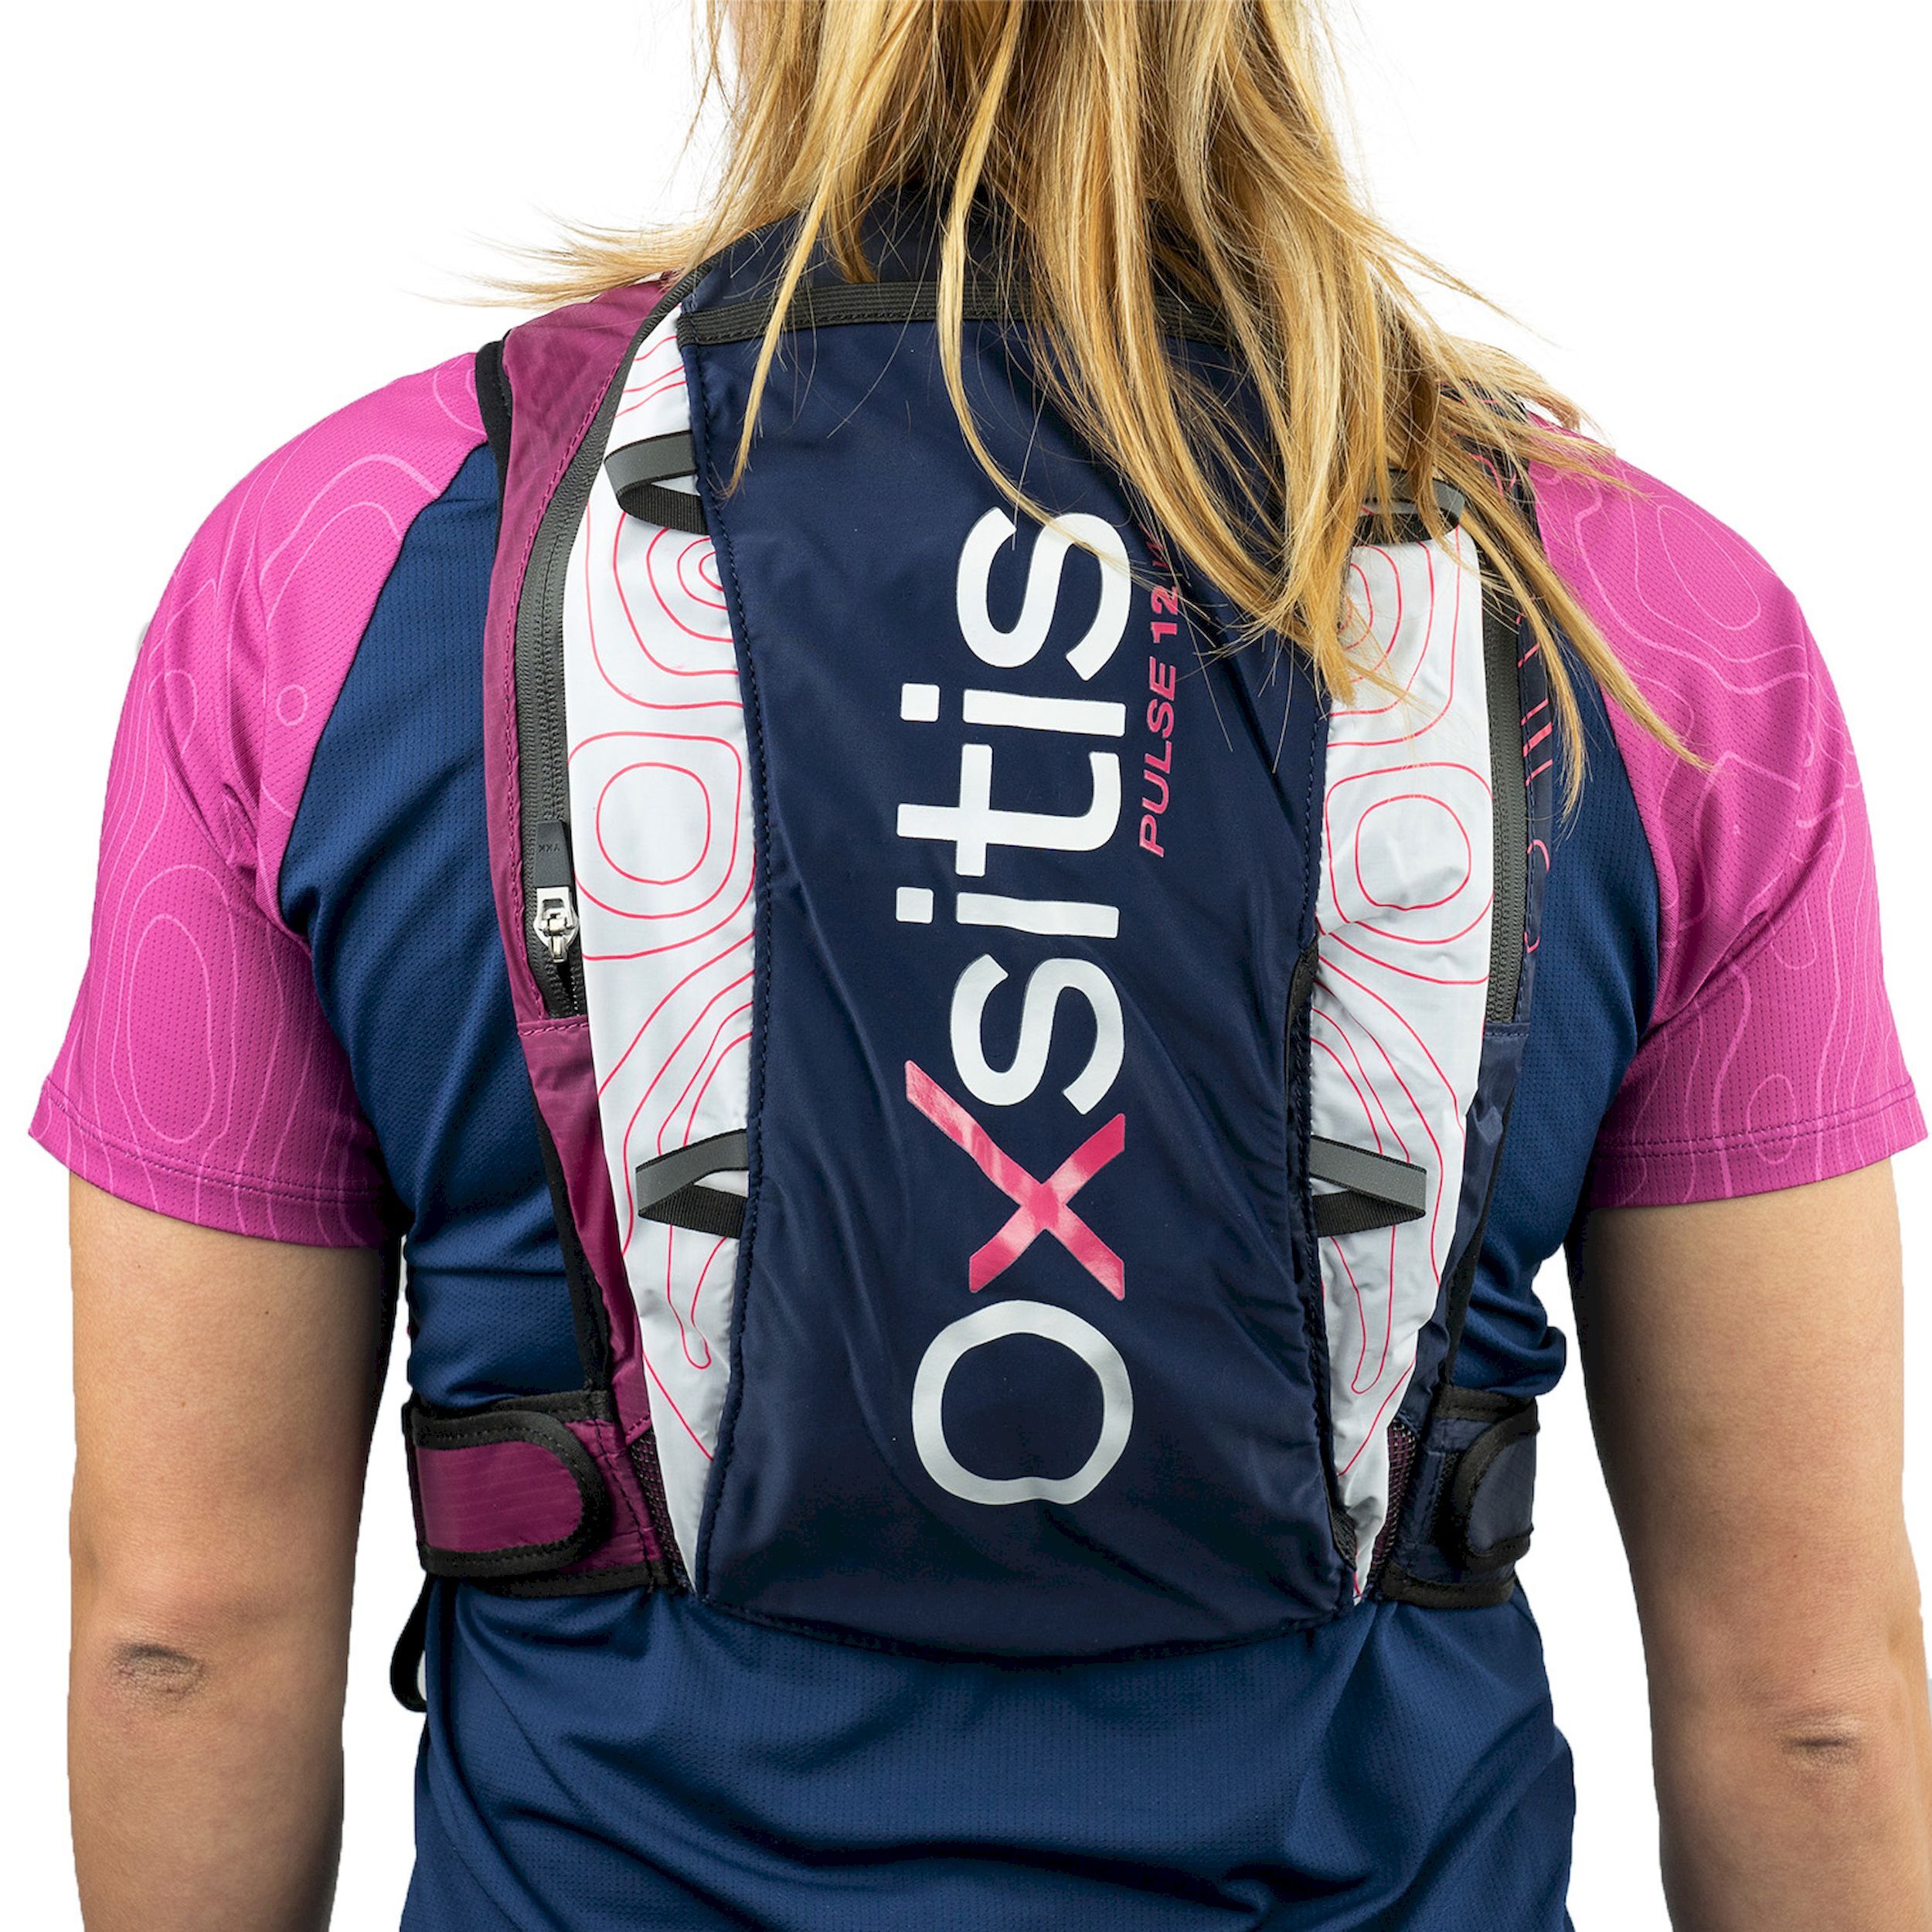 Oxsitis Pulse 12 BBR - Trail running backpack - Women's